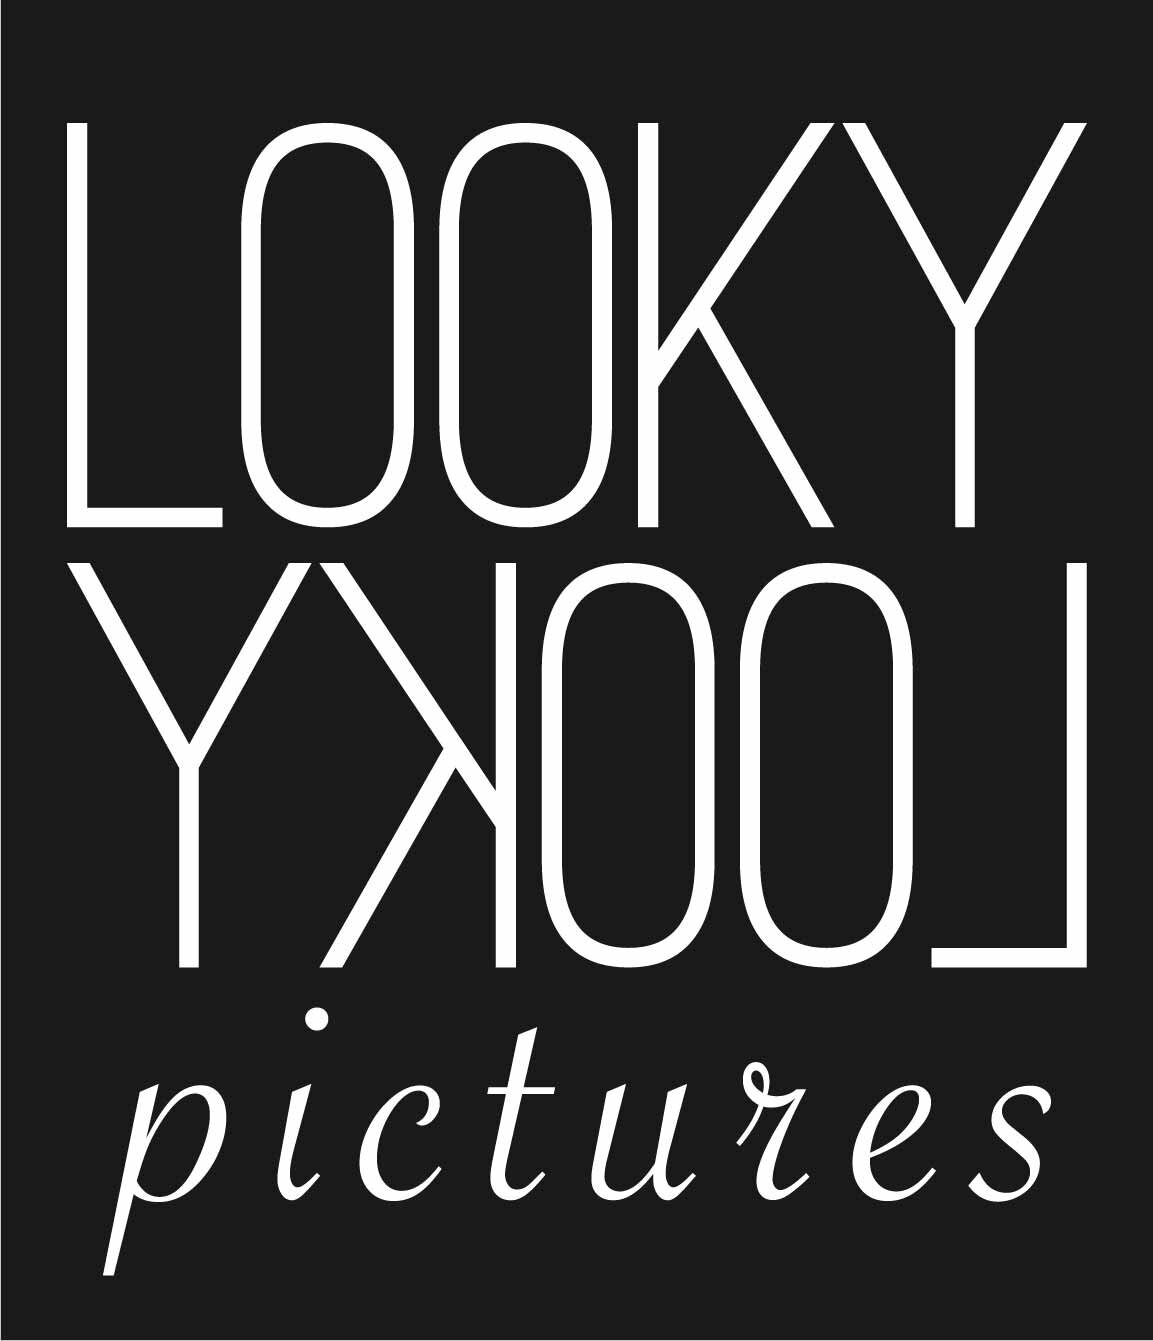  [Image description: Looky Looky Pictures logo.] 